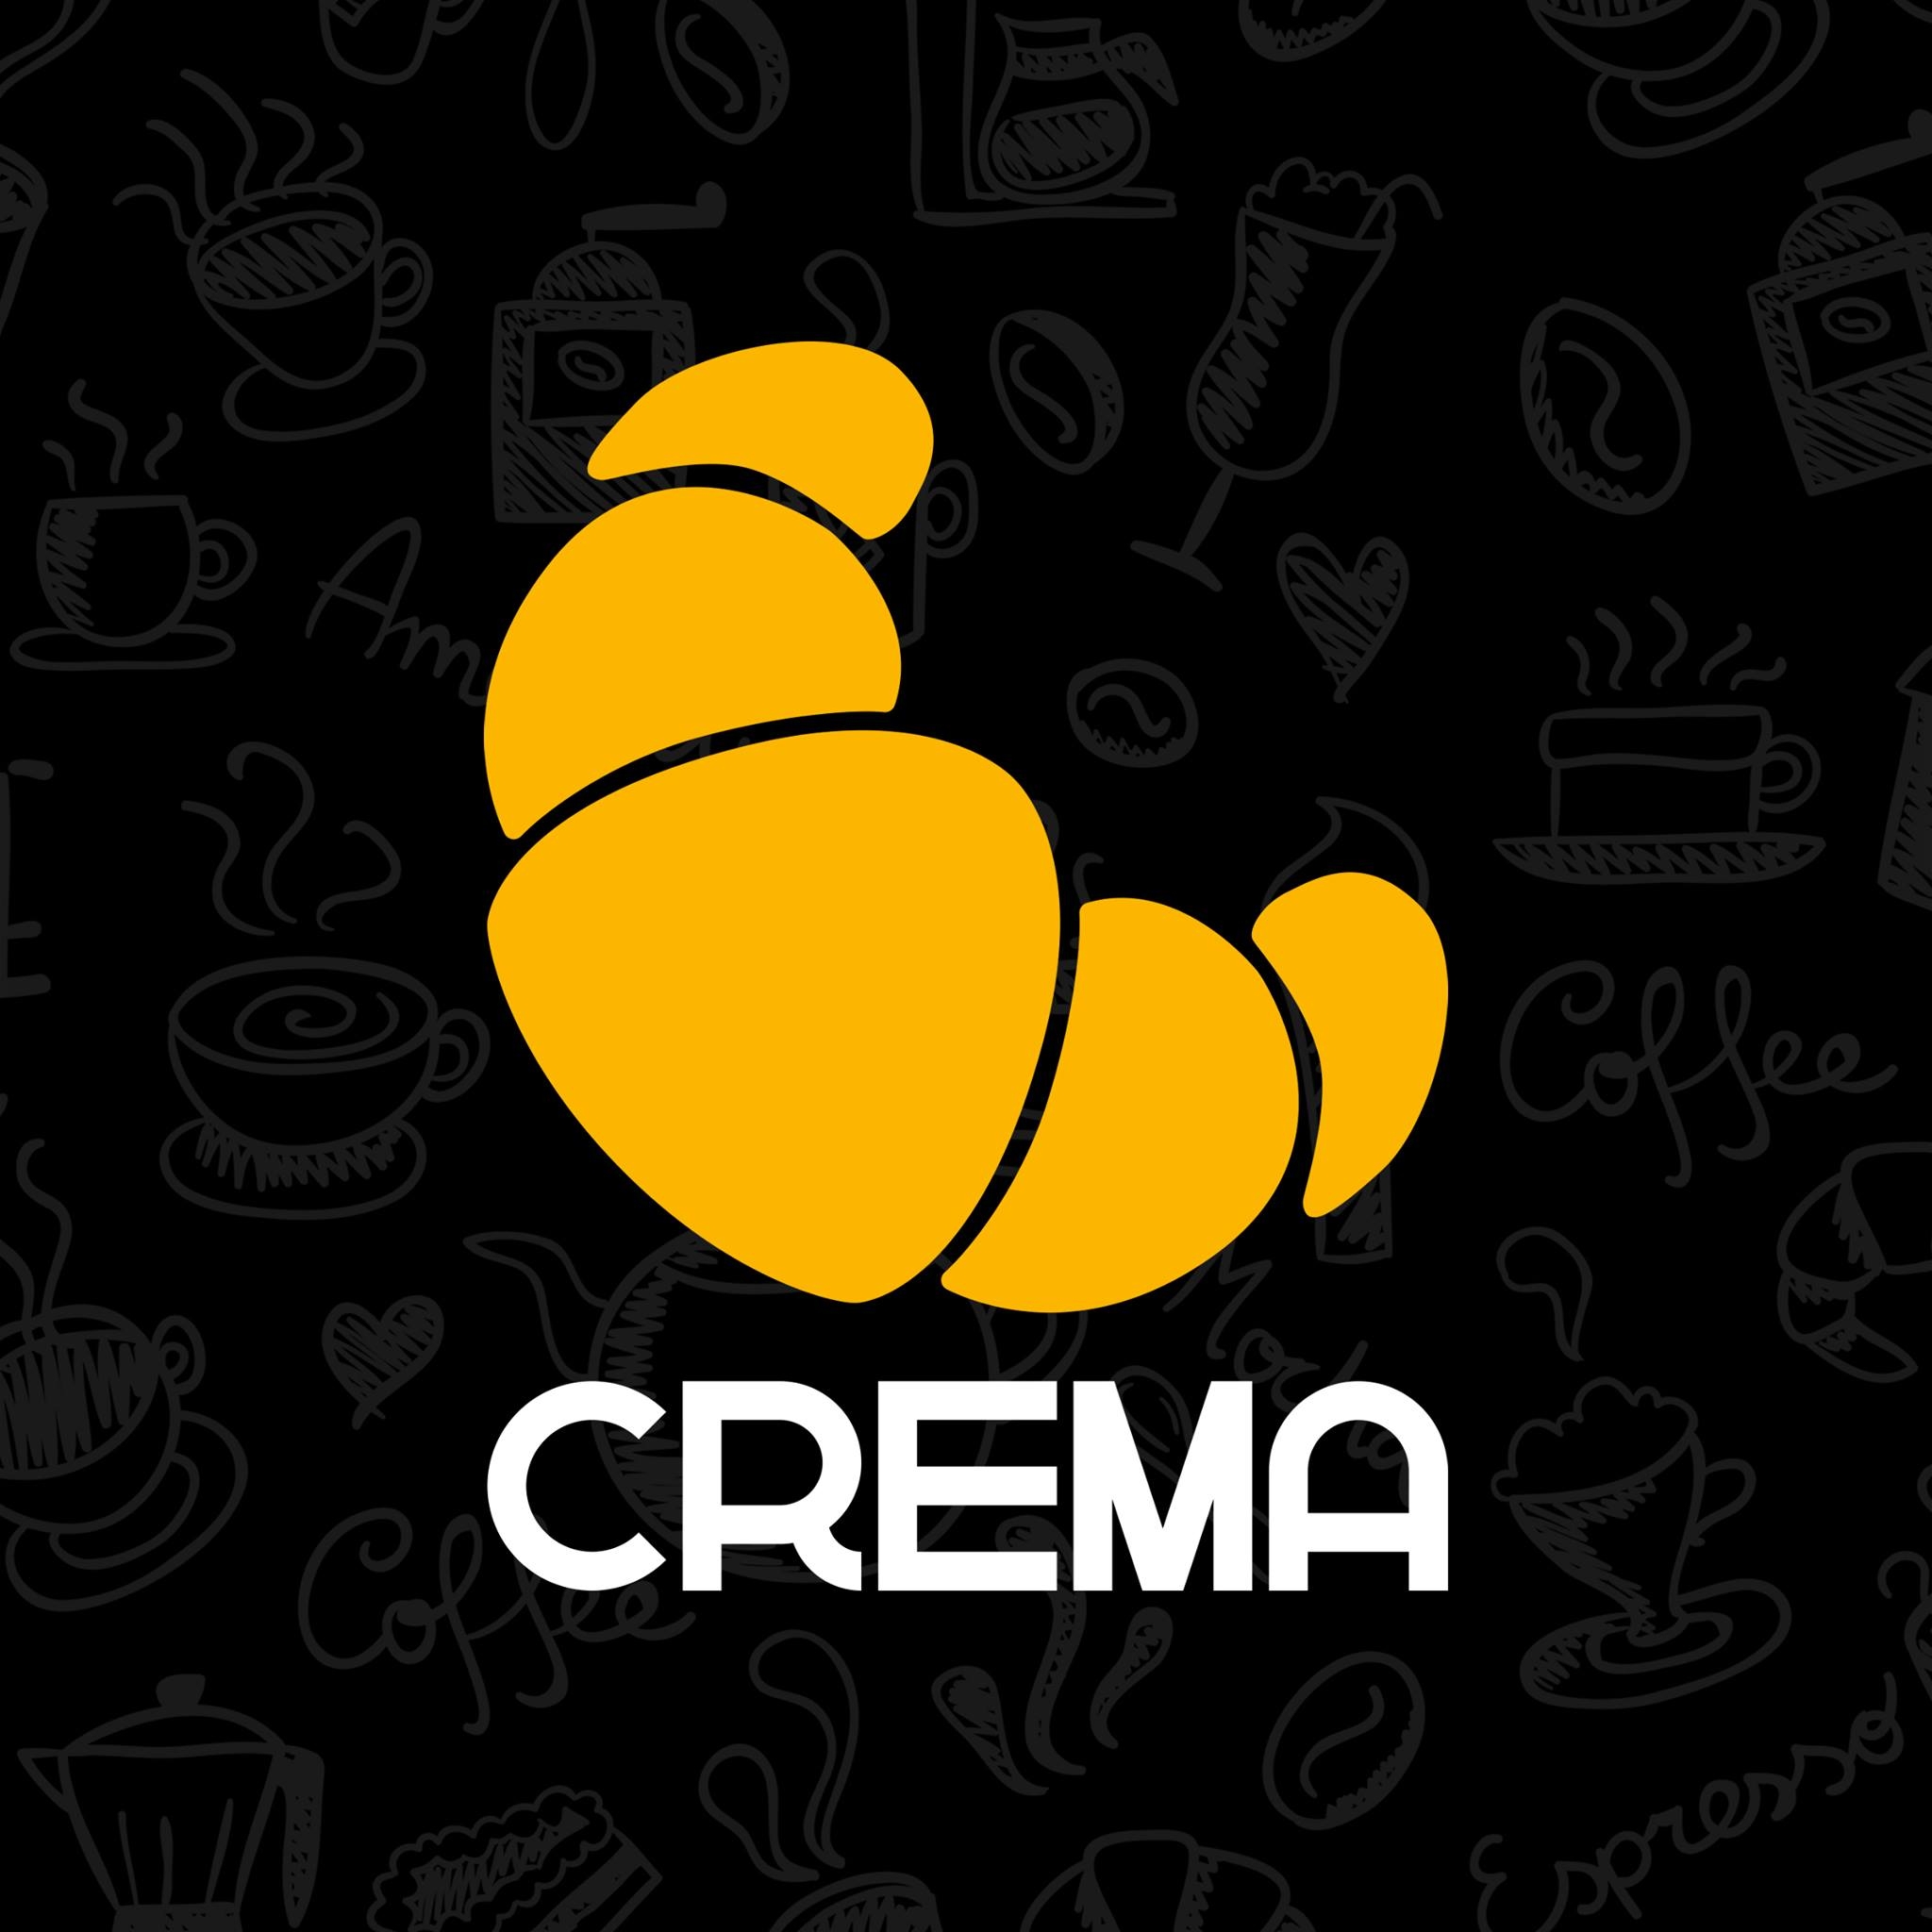  CREMA by SM